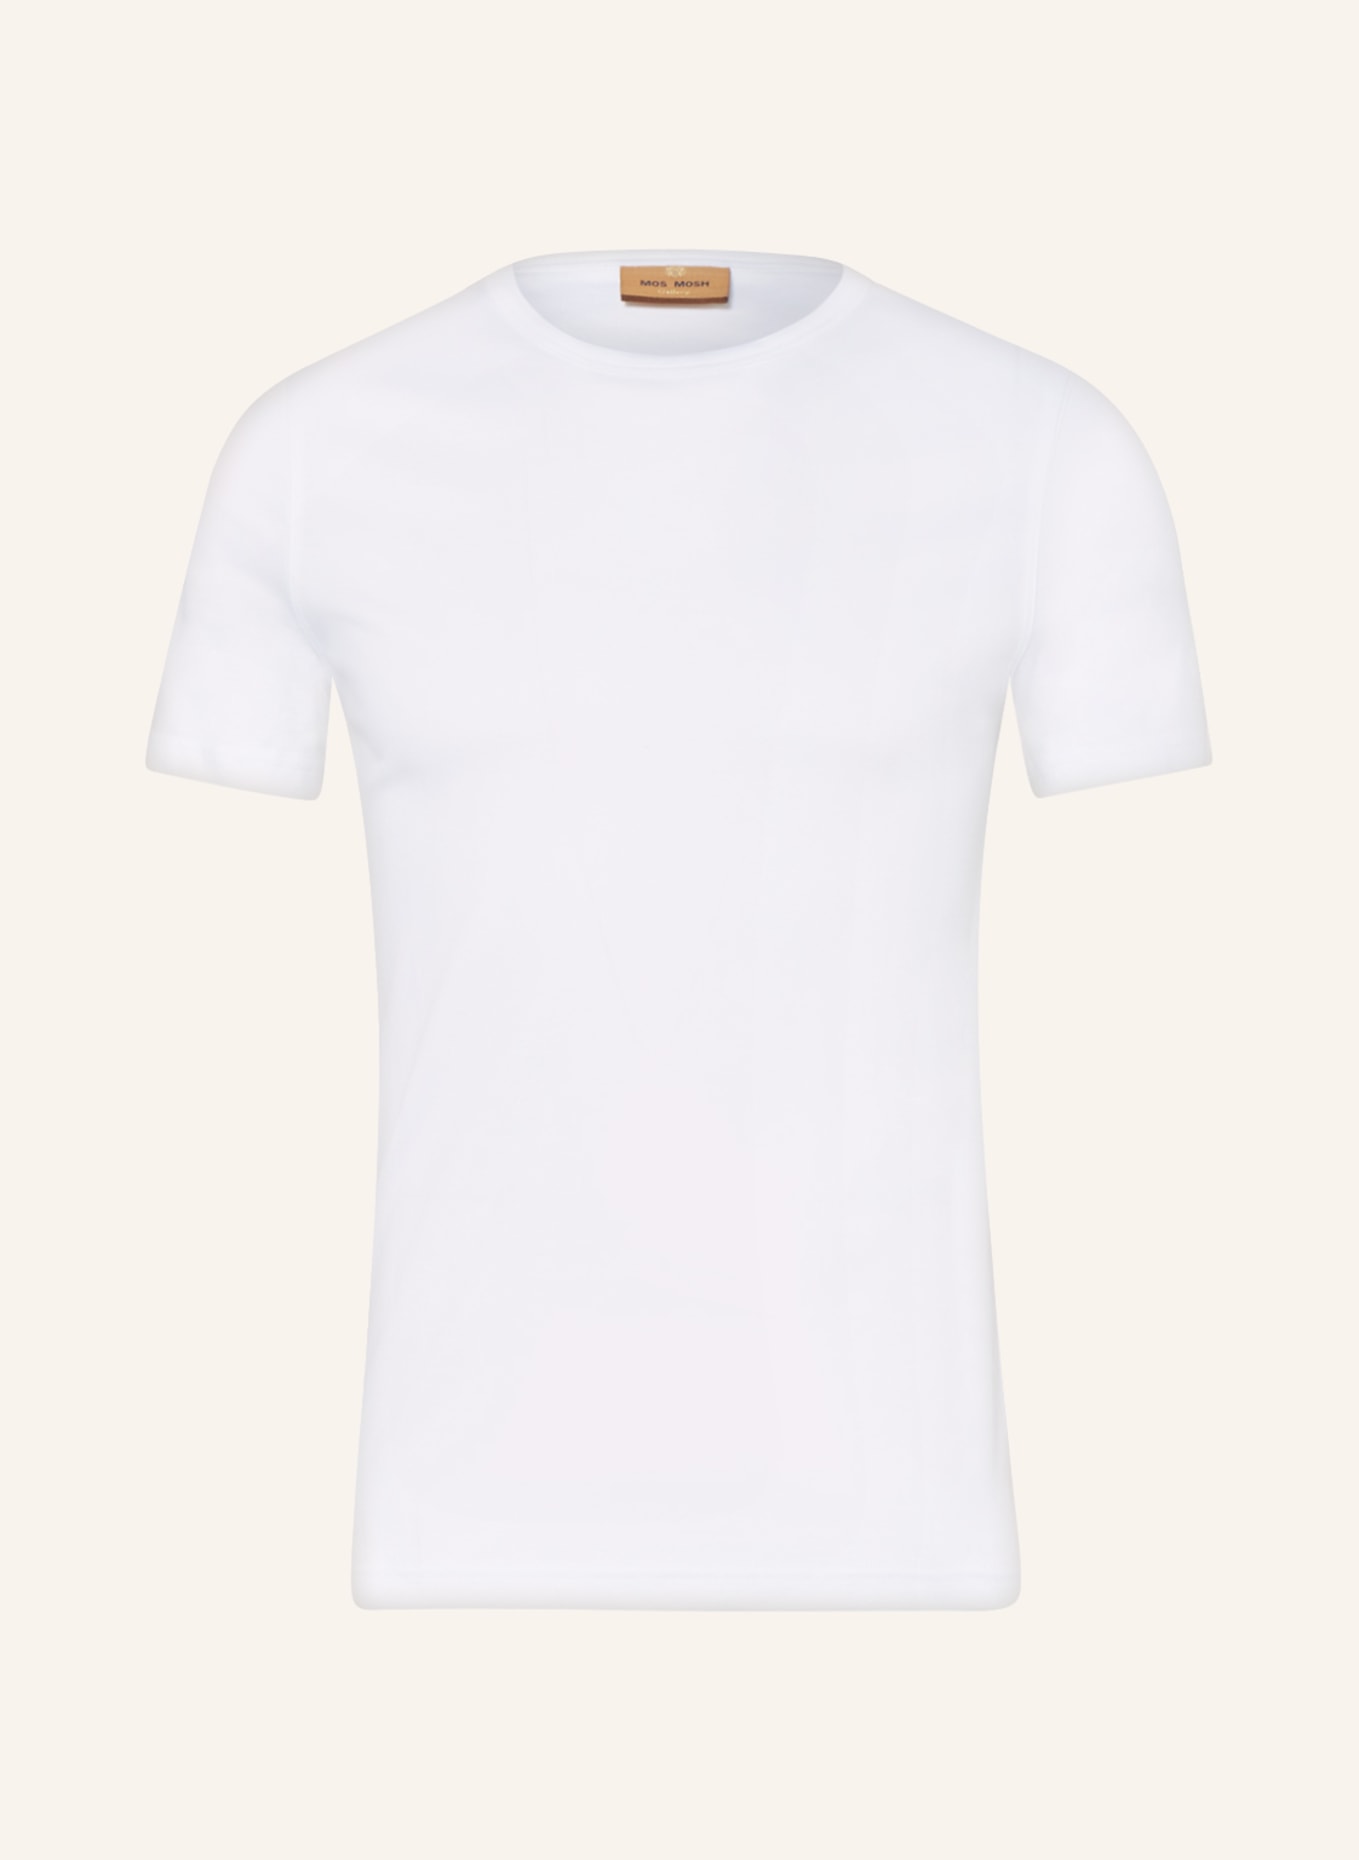 MOS MOSH Gallery T-Shirt PERRY CRUNCH, Farbe: WEISS (Bild 1)